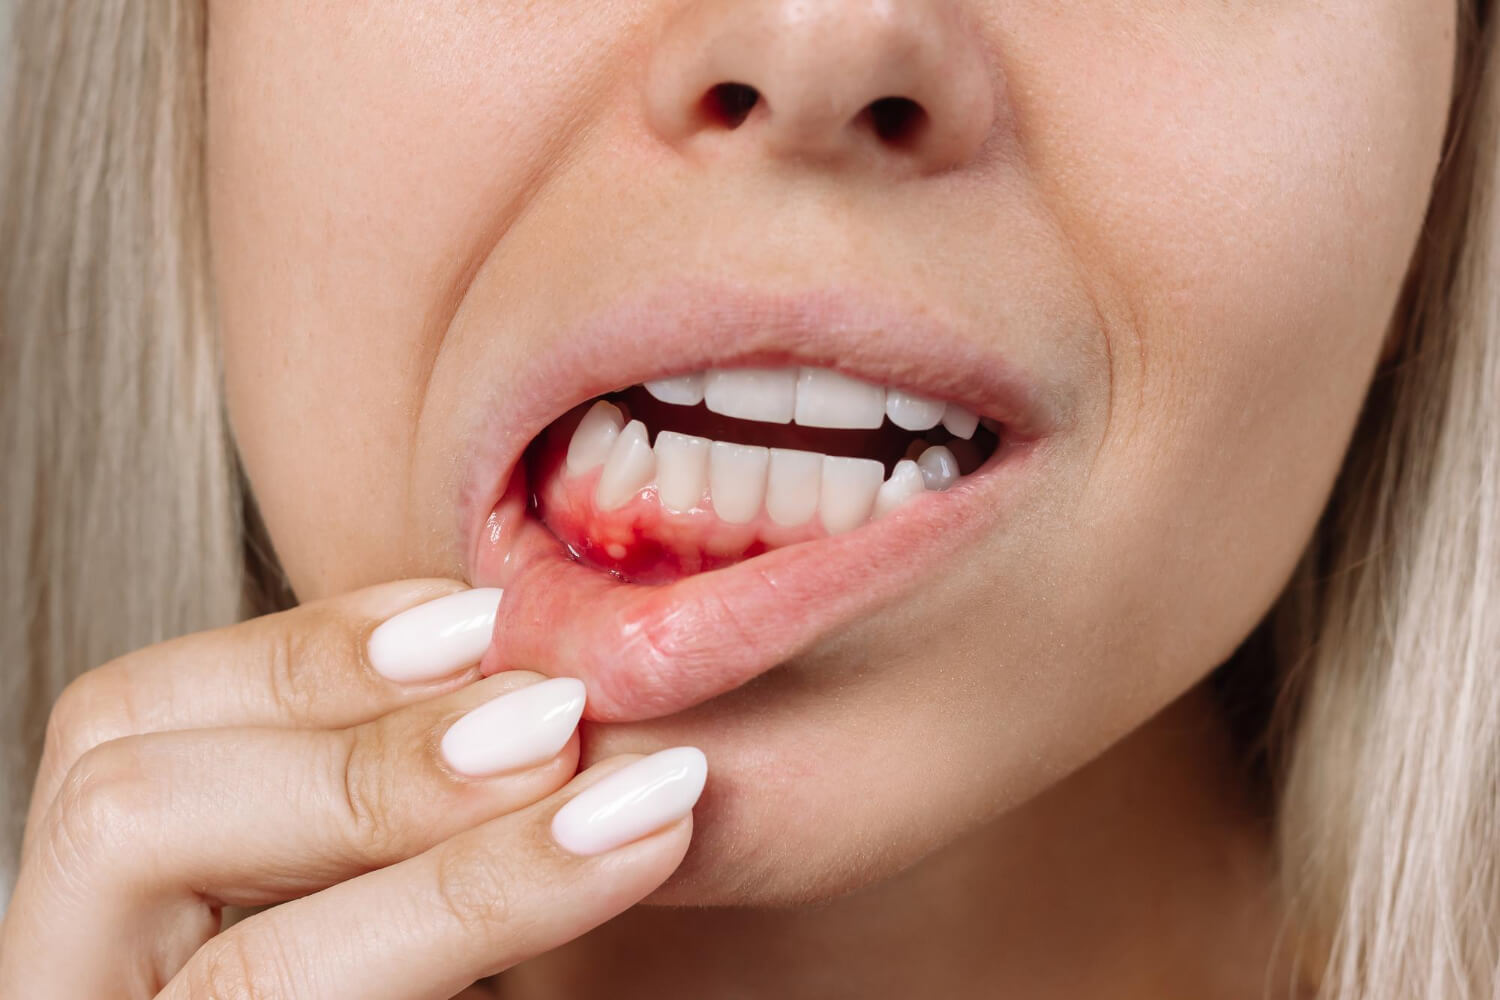 stomatitis gums red bleeding show by female